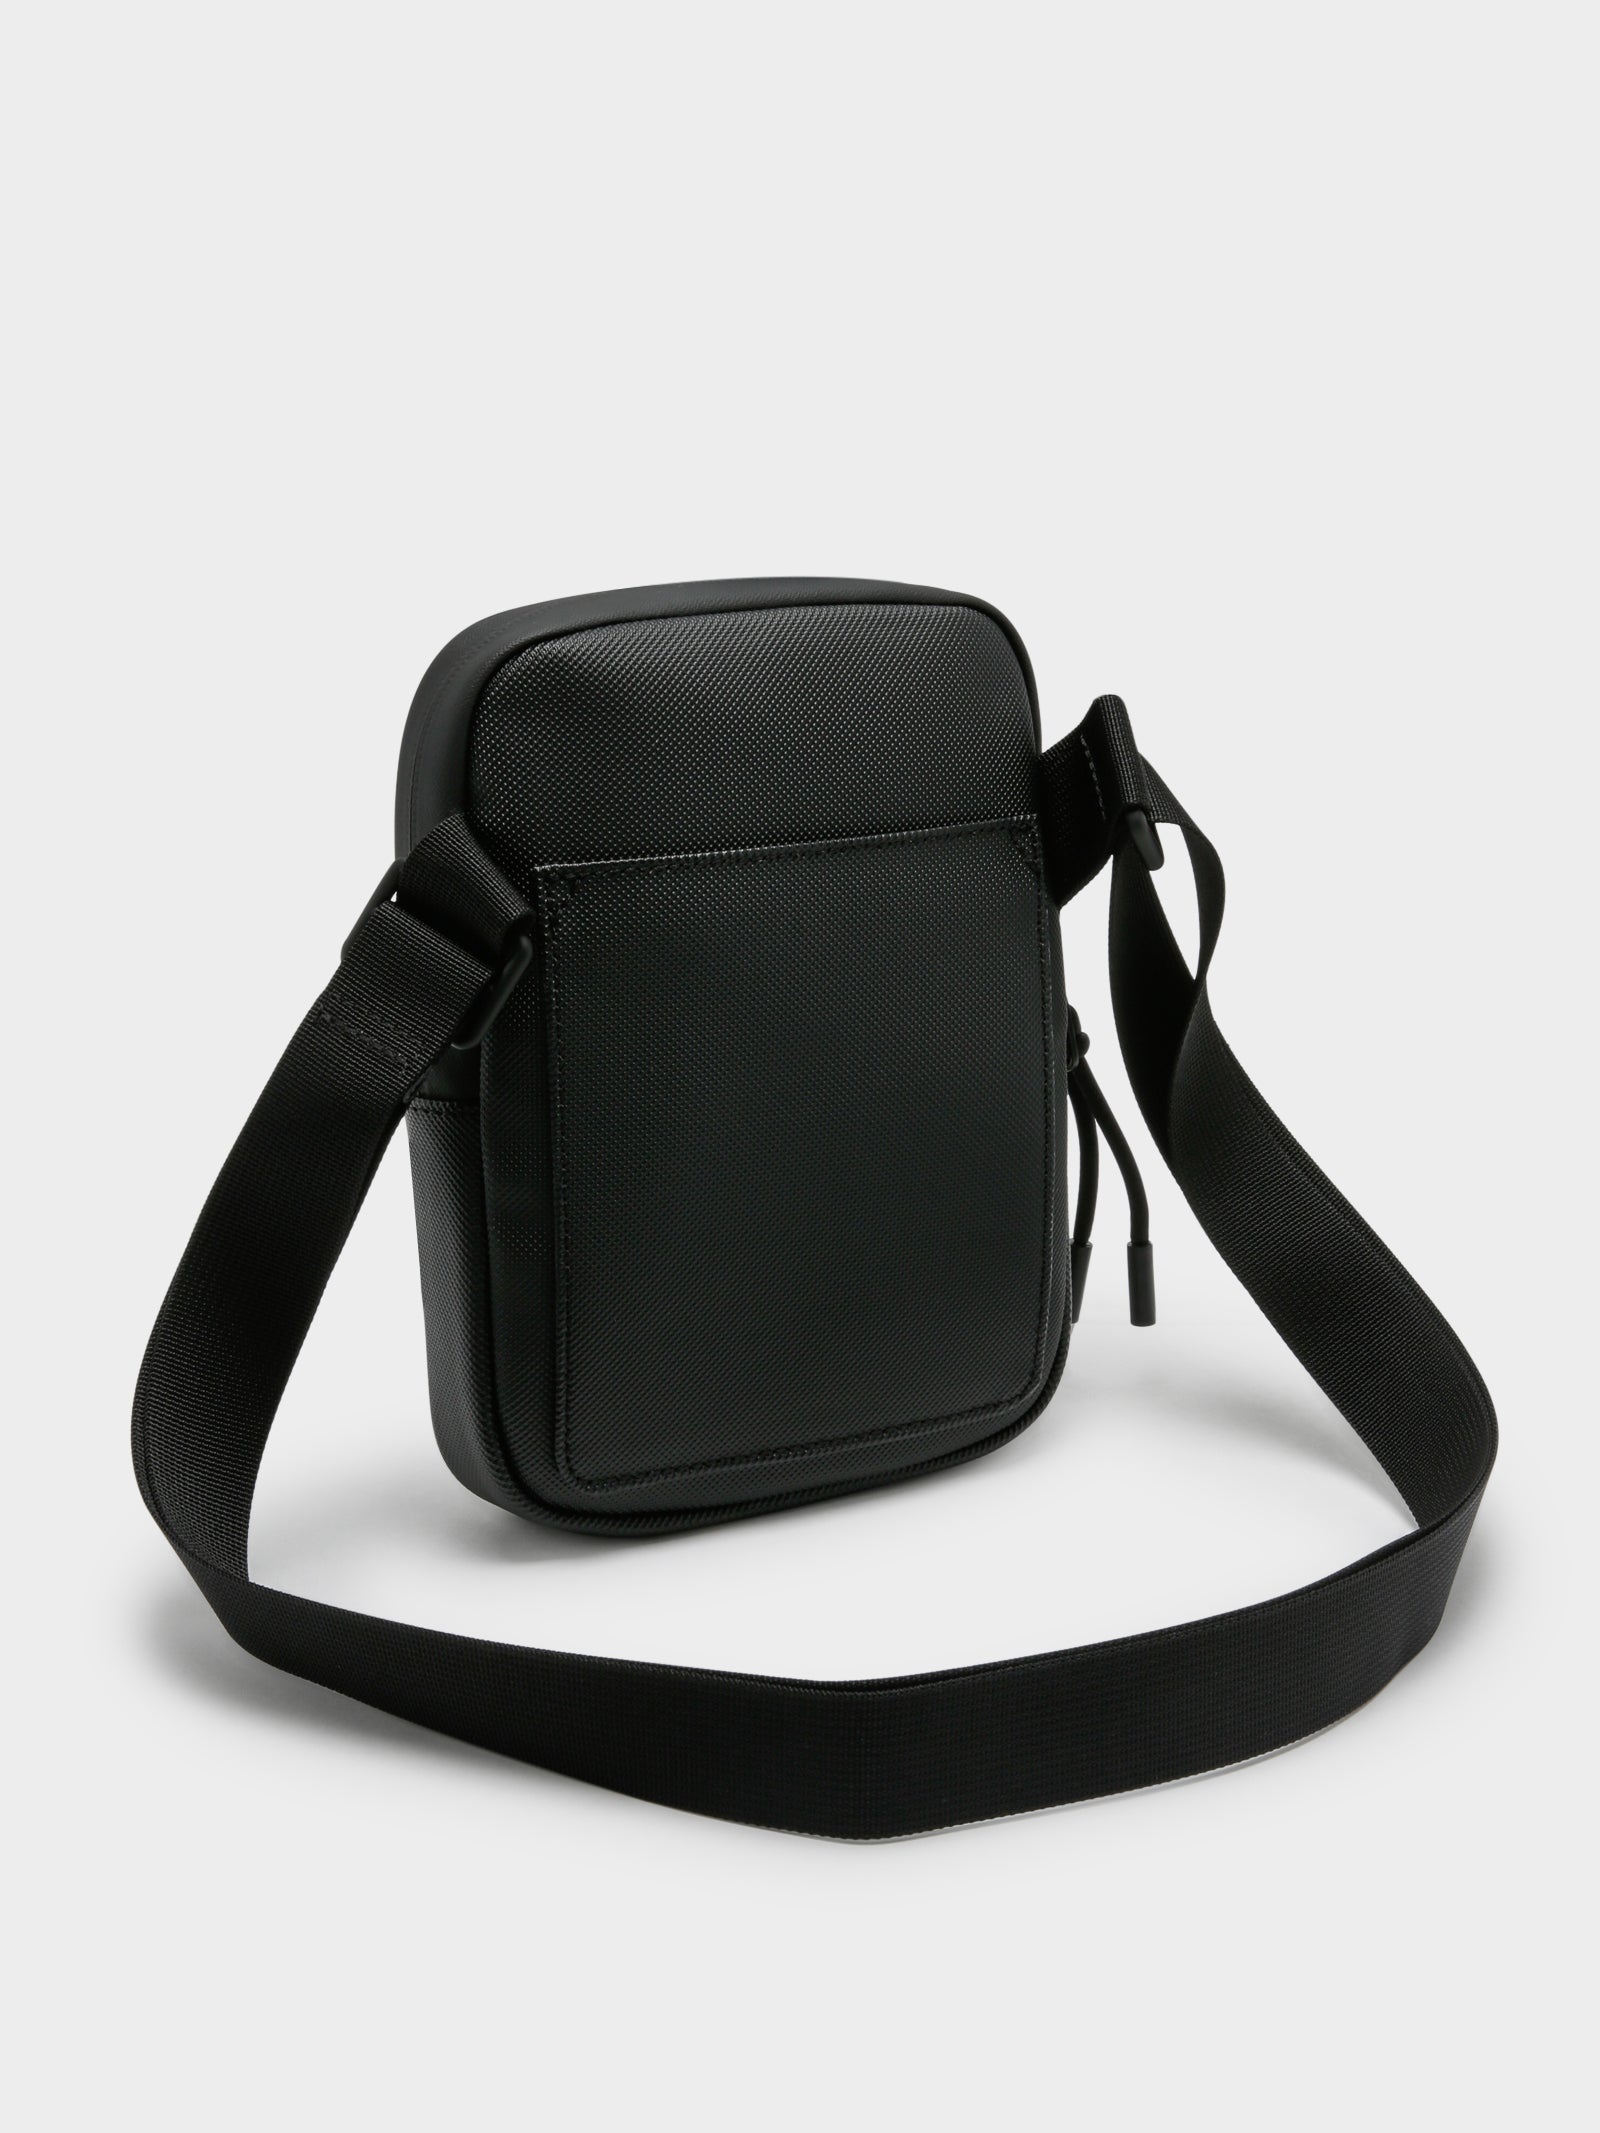 Essentials Small Cross Body Bag in Black - Glue Store